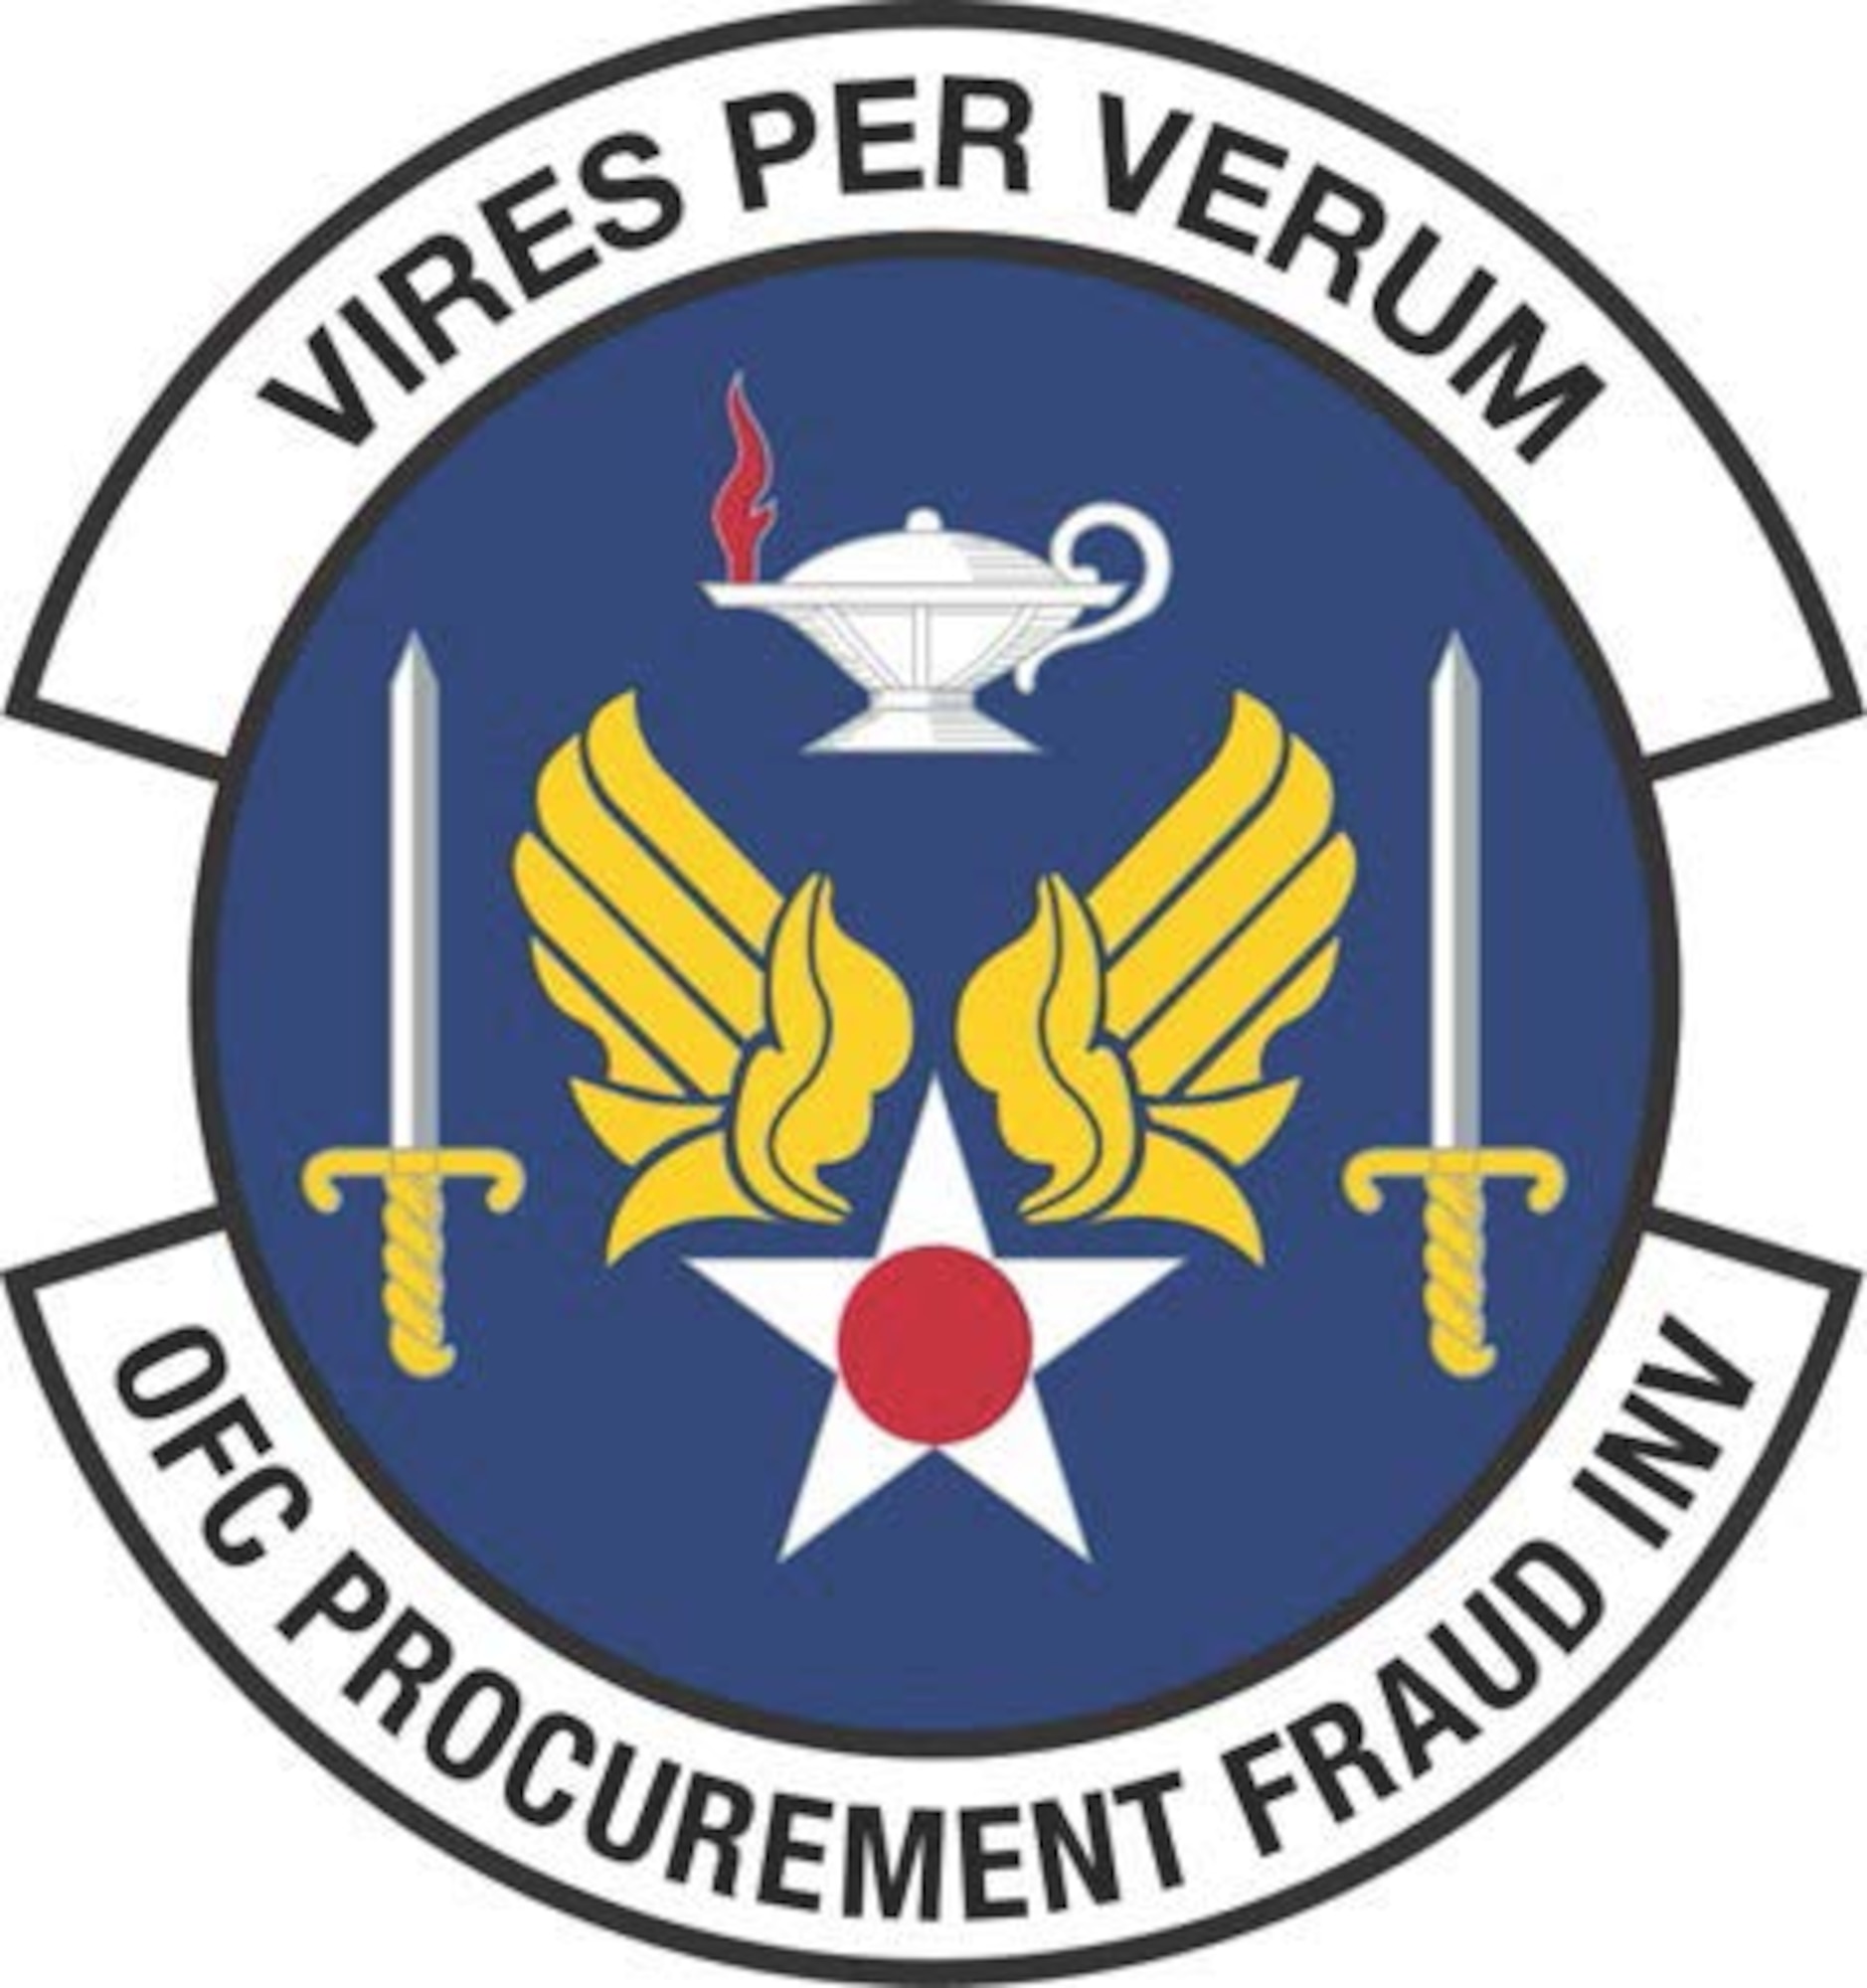 Air Force Procurement Fraud organizational patch